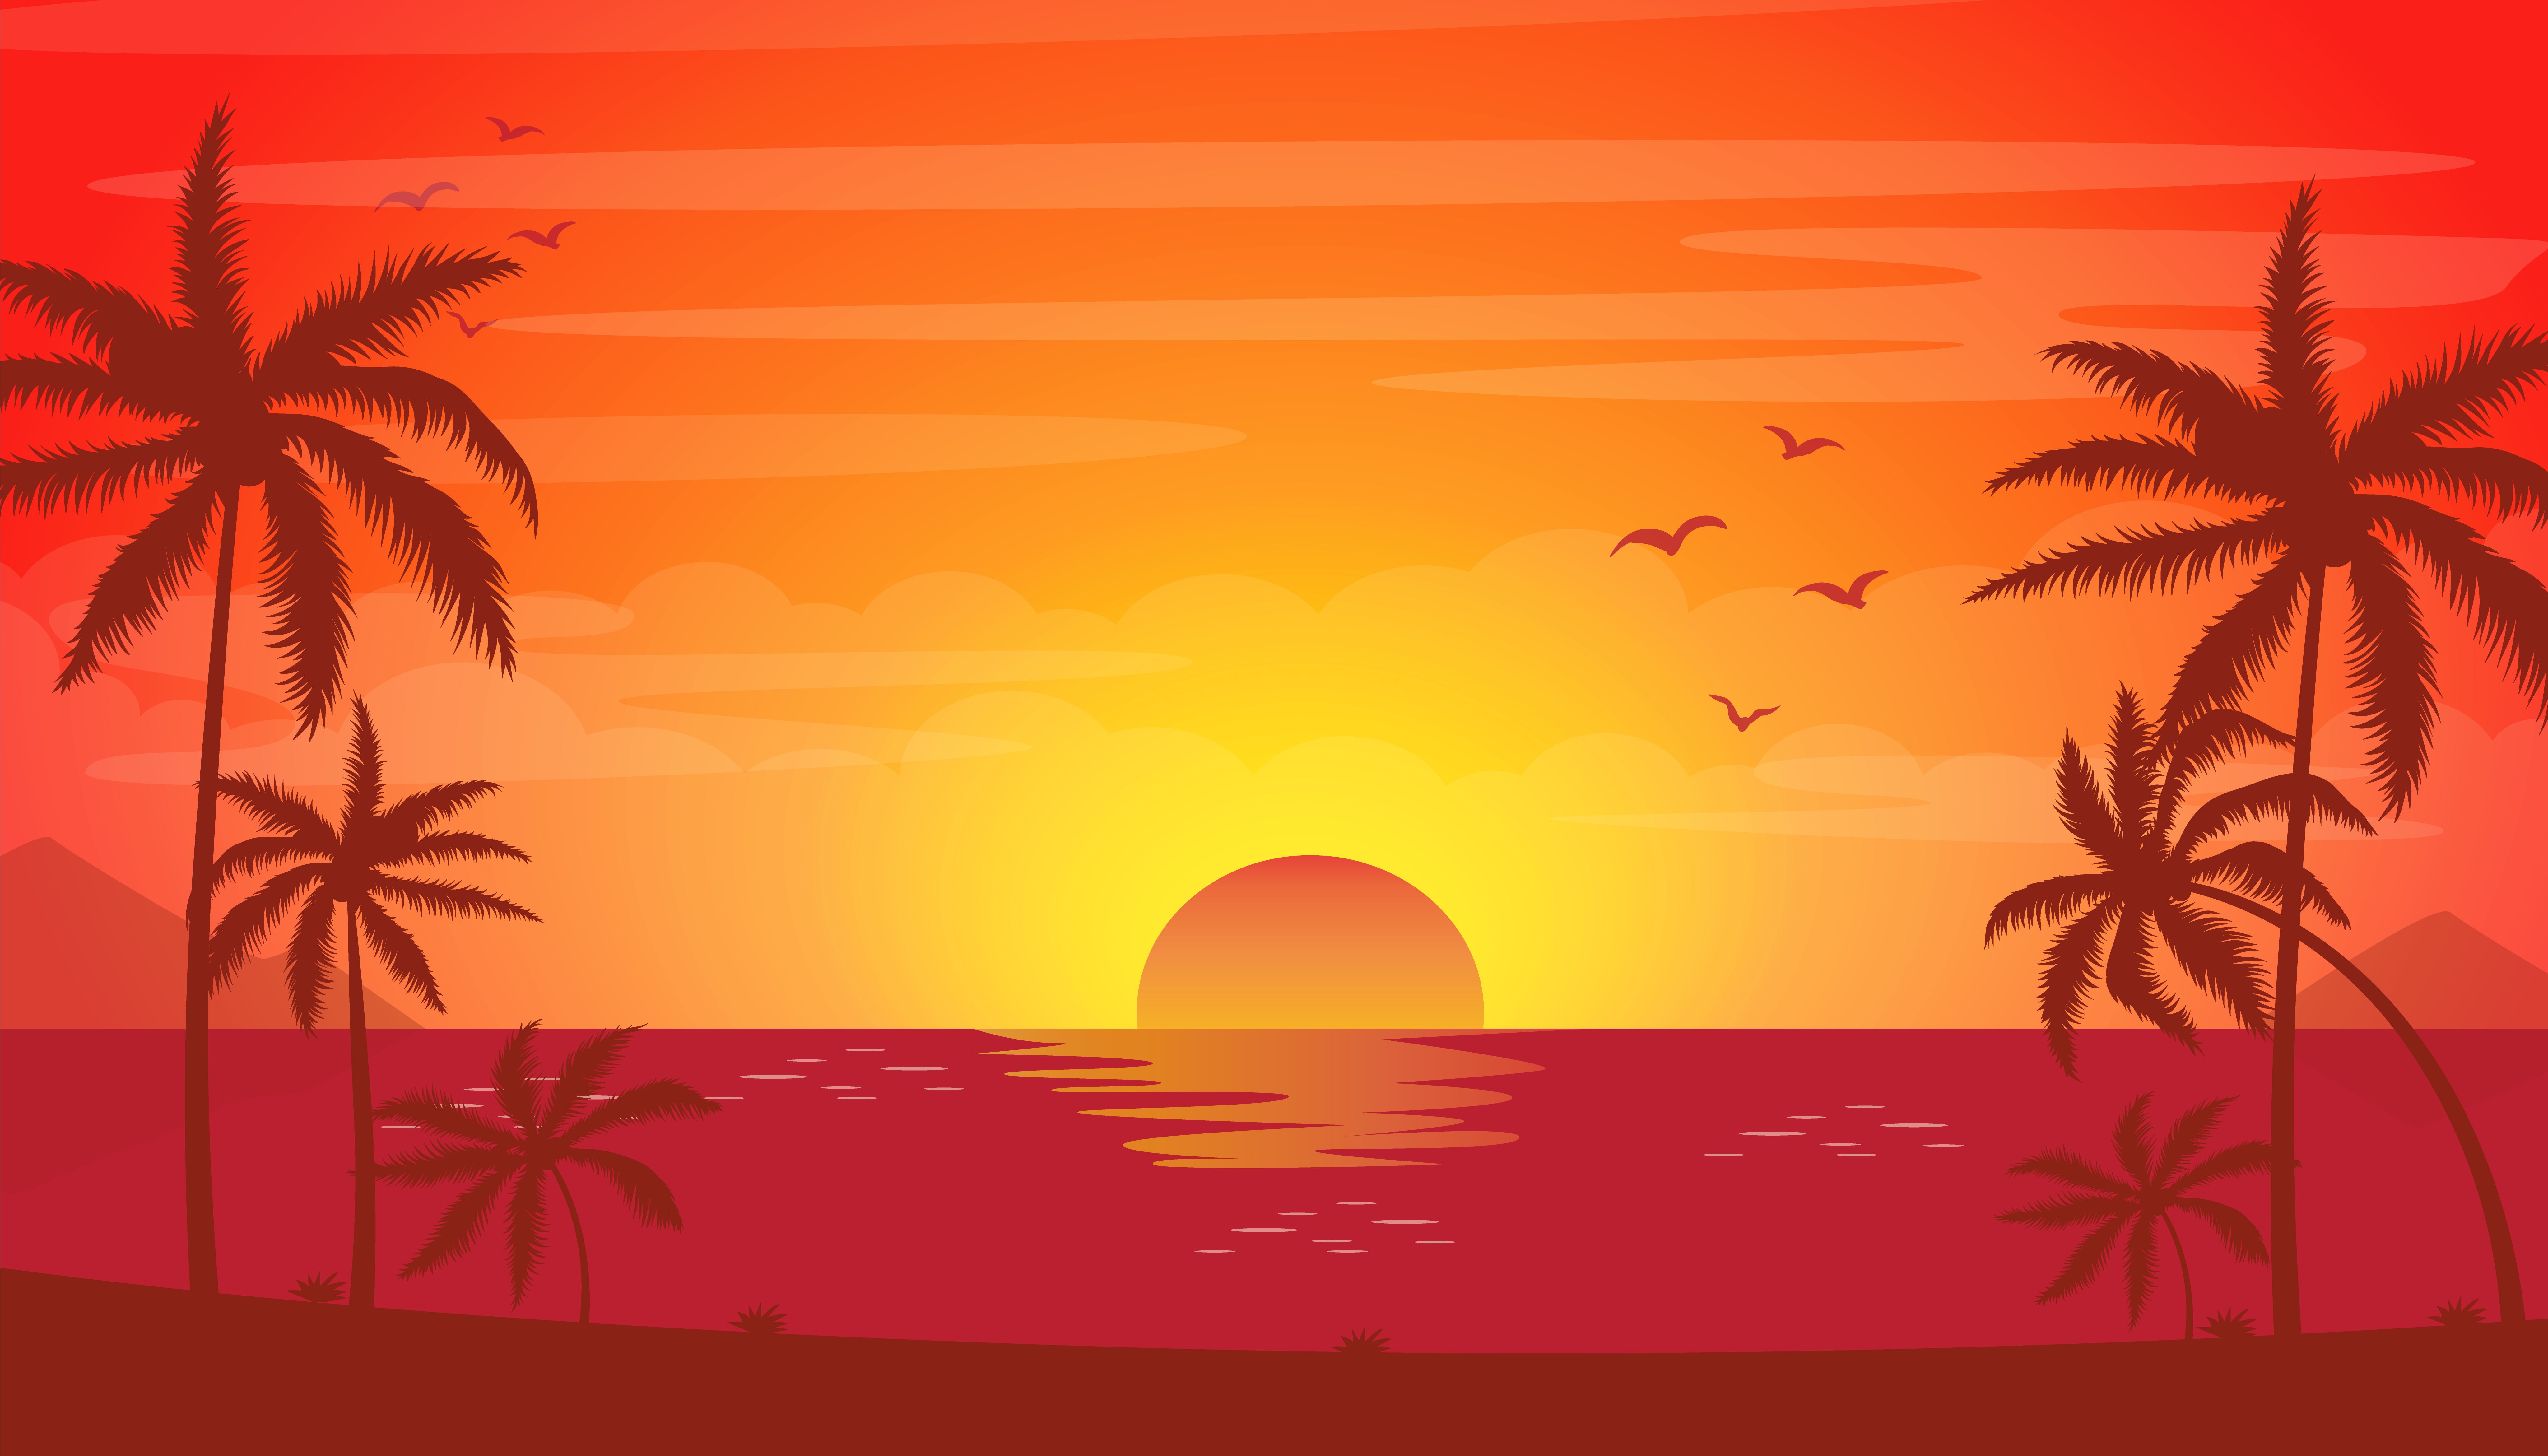 Free Image, sunshine, sky, sunset, orange, palm tree, sunrise, computer wallpaper, arecales, afterglow, calm, dawn, illustration, sun 8192x4681 Boss